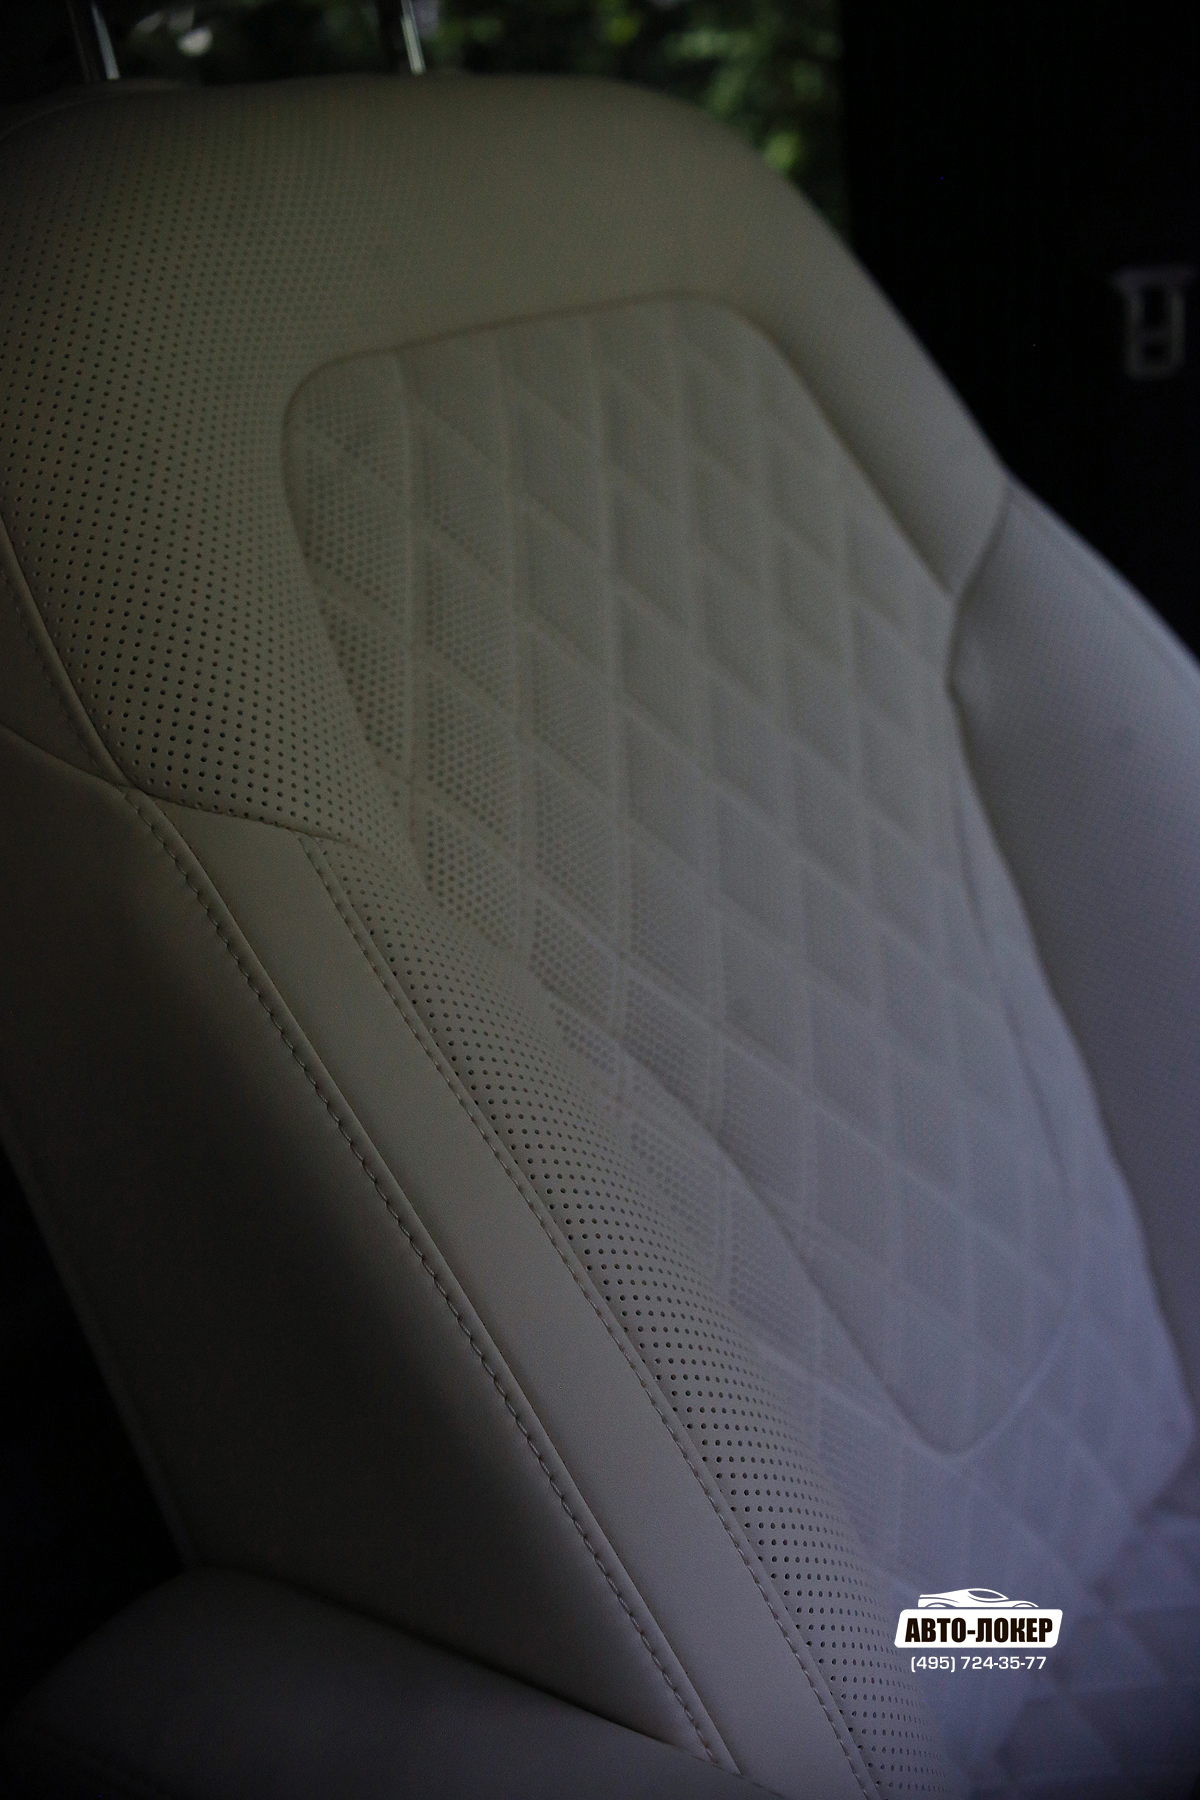 Перетяжка кожей сидений Mercedes V-klass W447